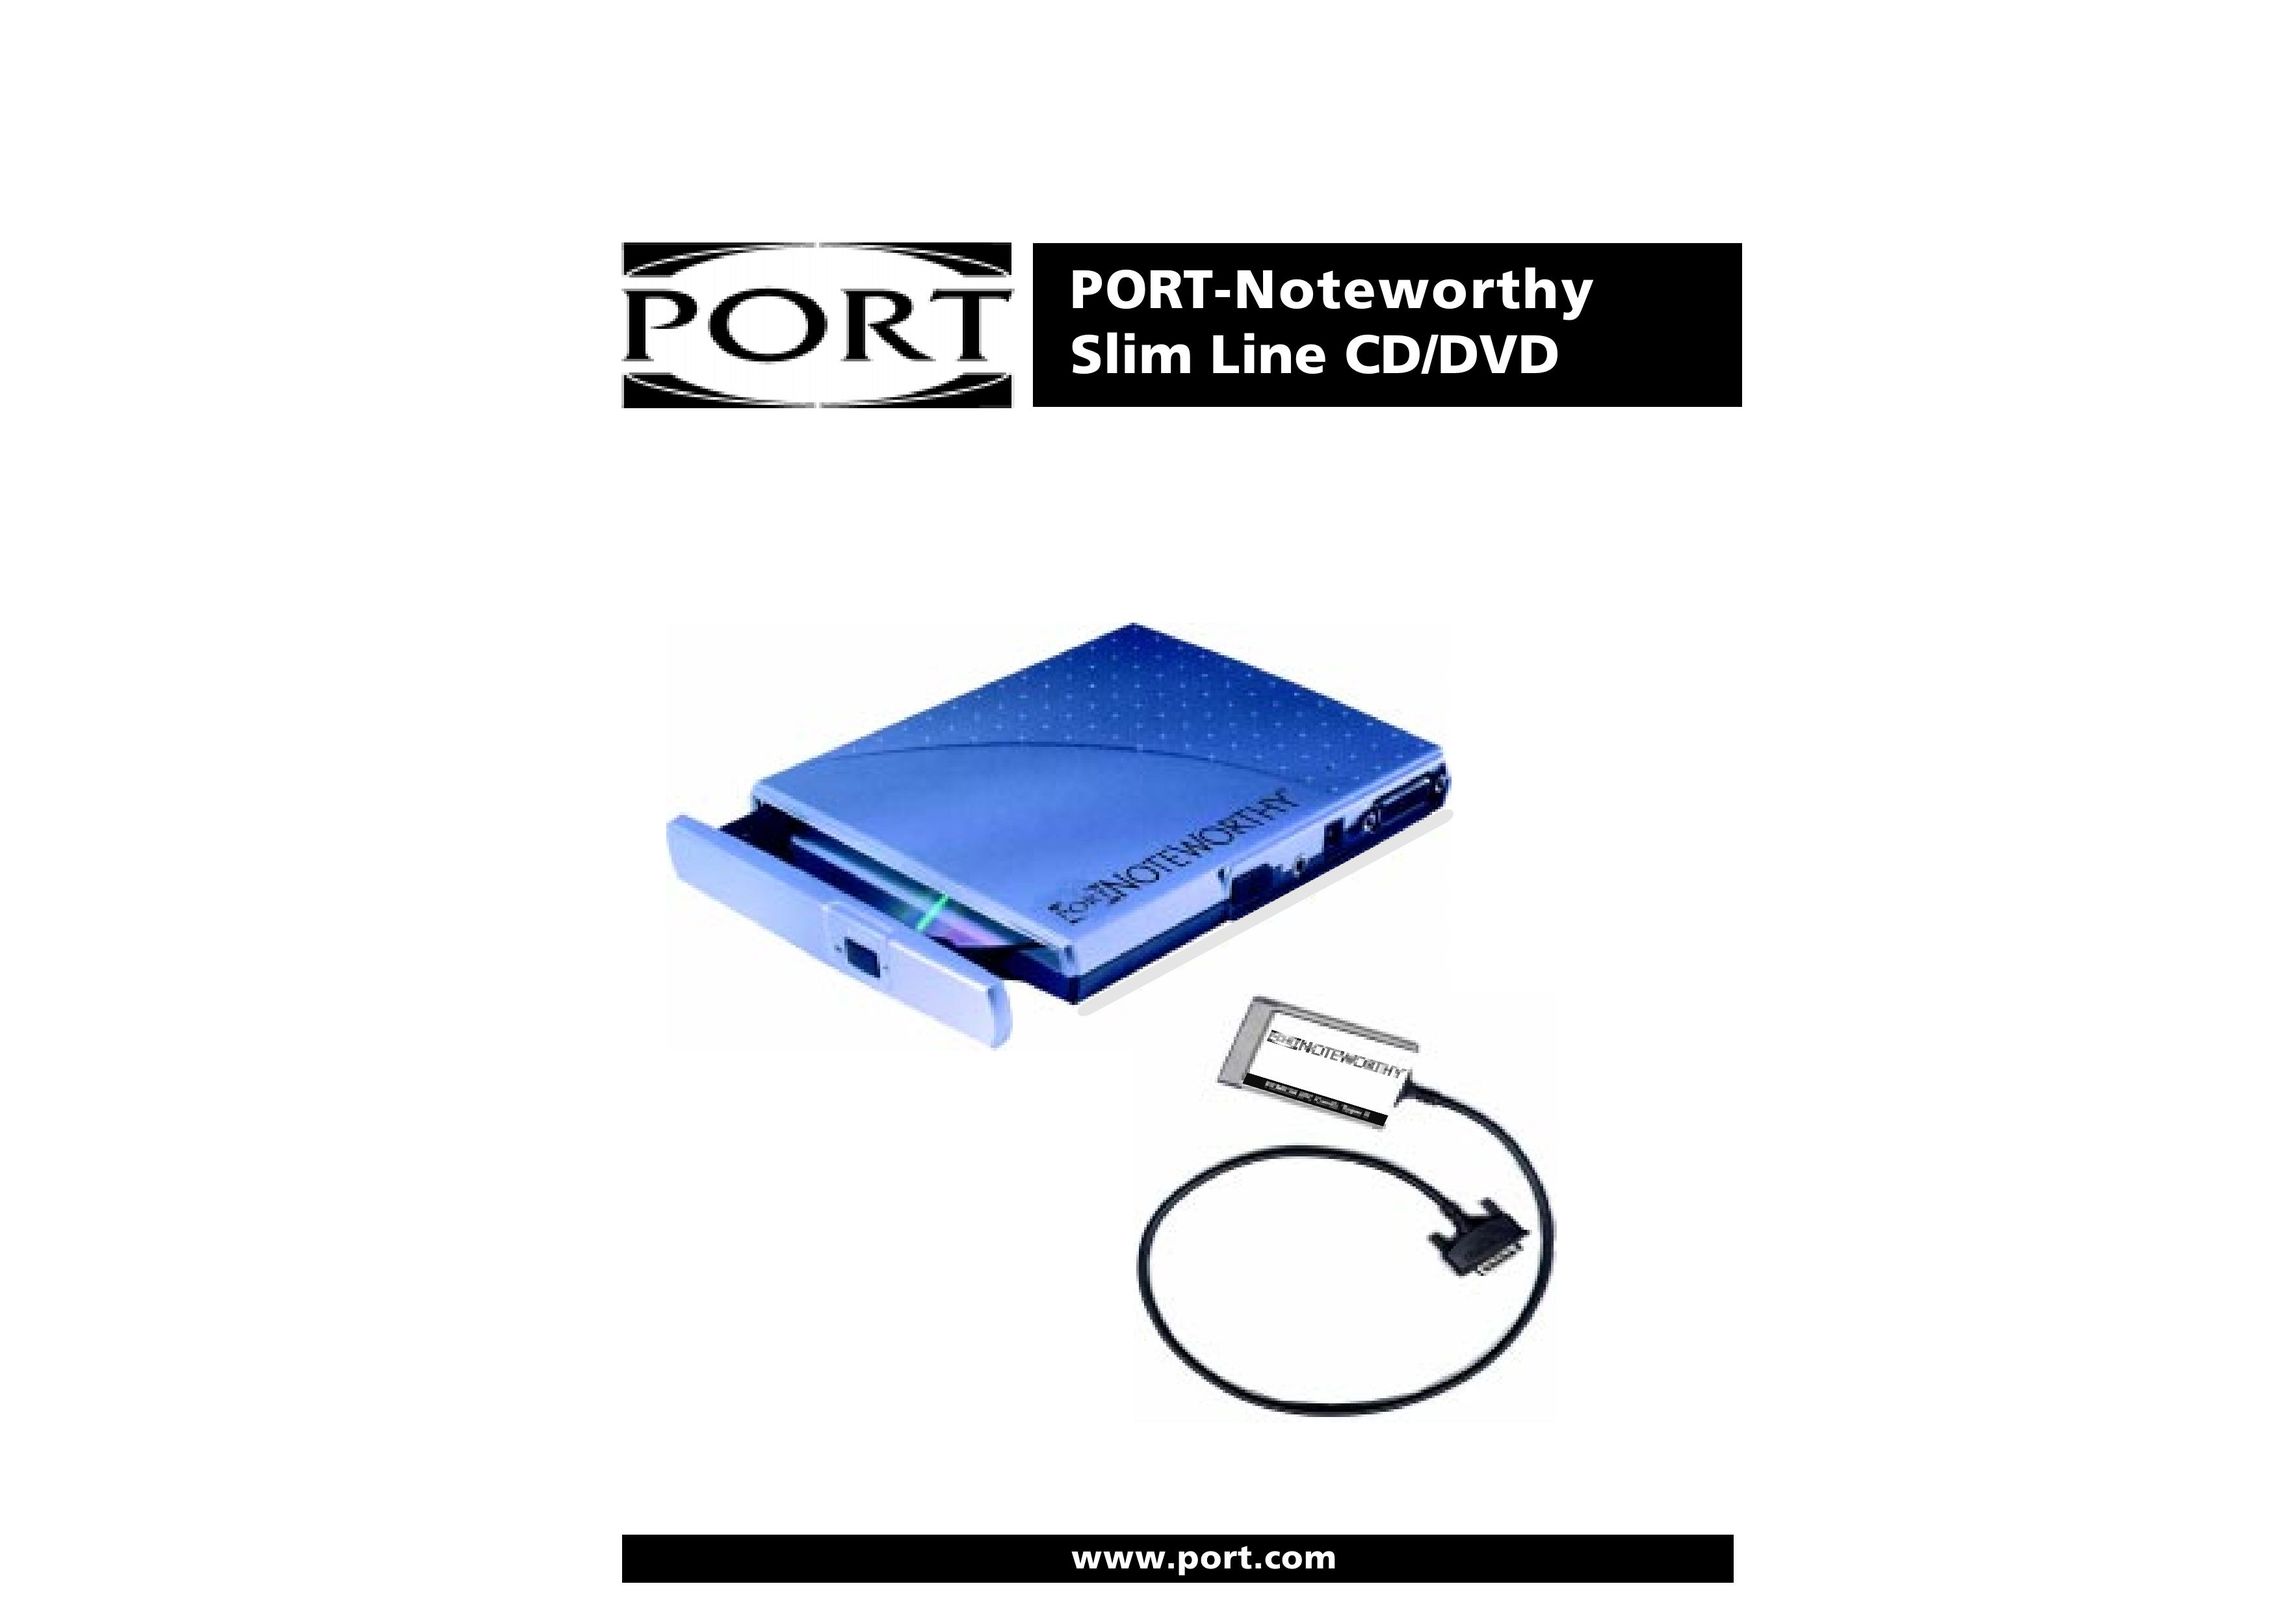 PORT Noteworthy Slim Line CD/DVD DVD Player User Manual